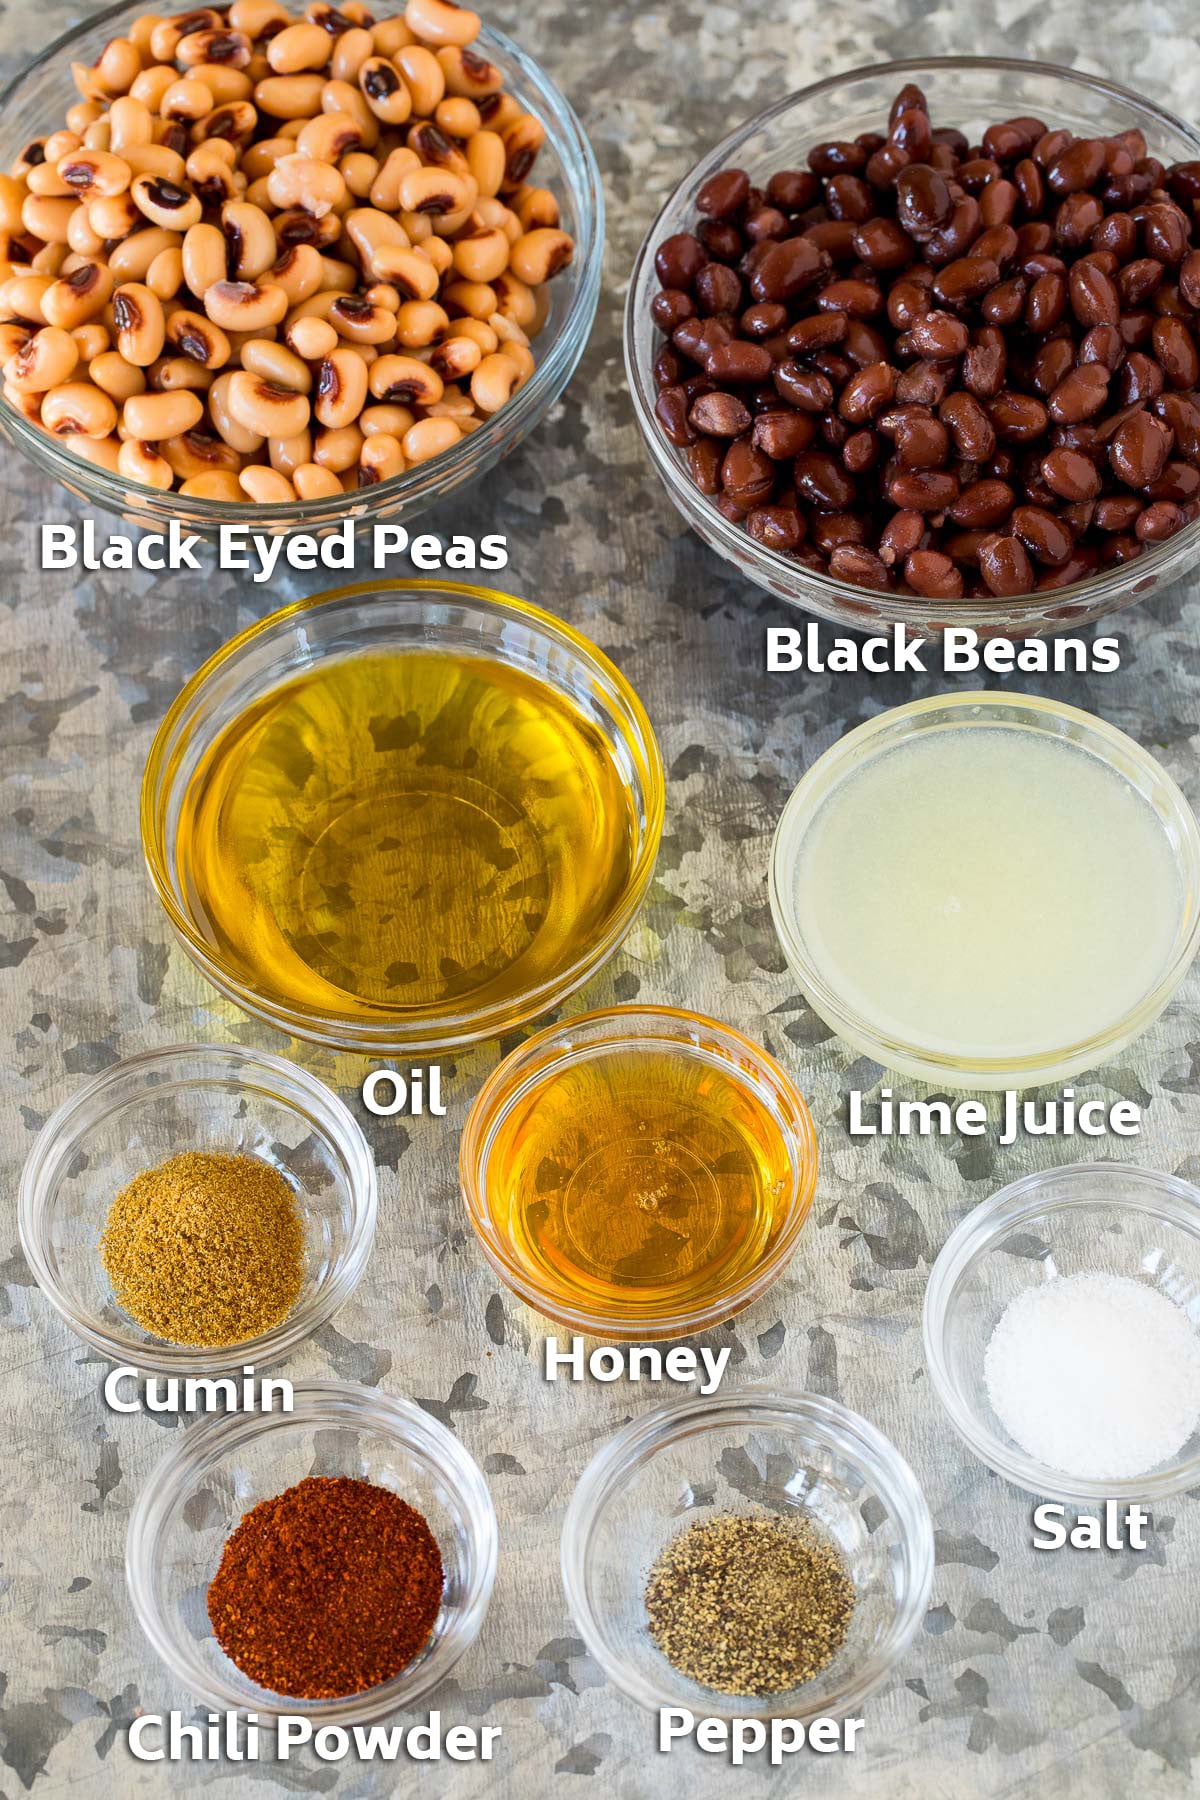 Bowls of beans, black eyed peas and salad dressing ingredients.